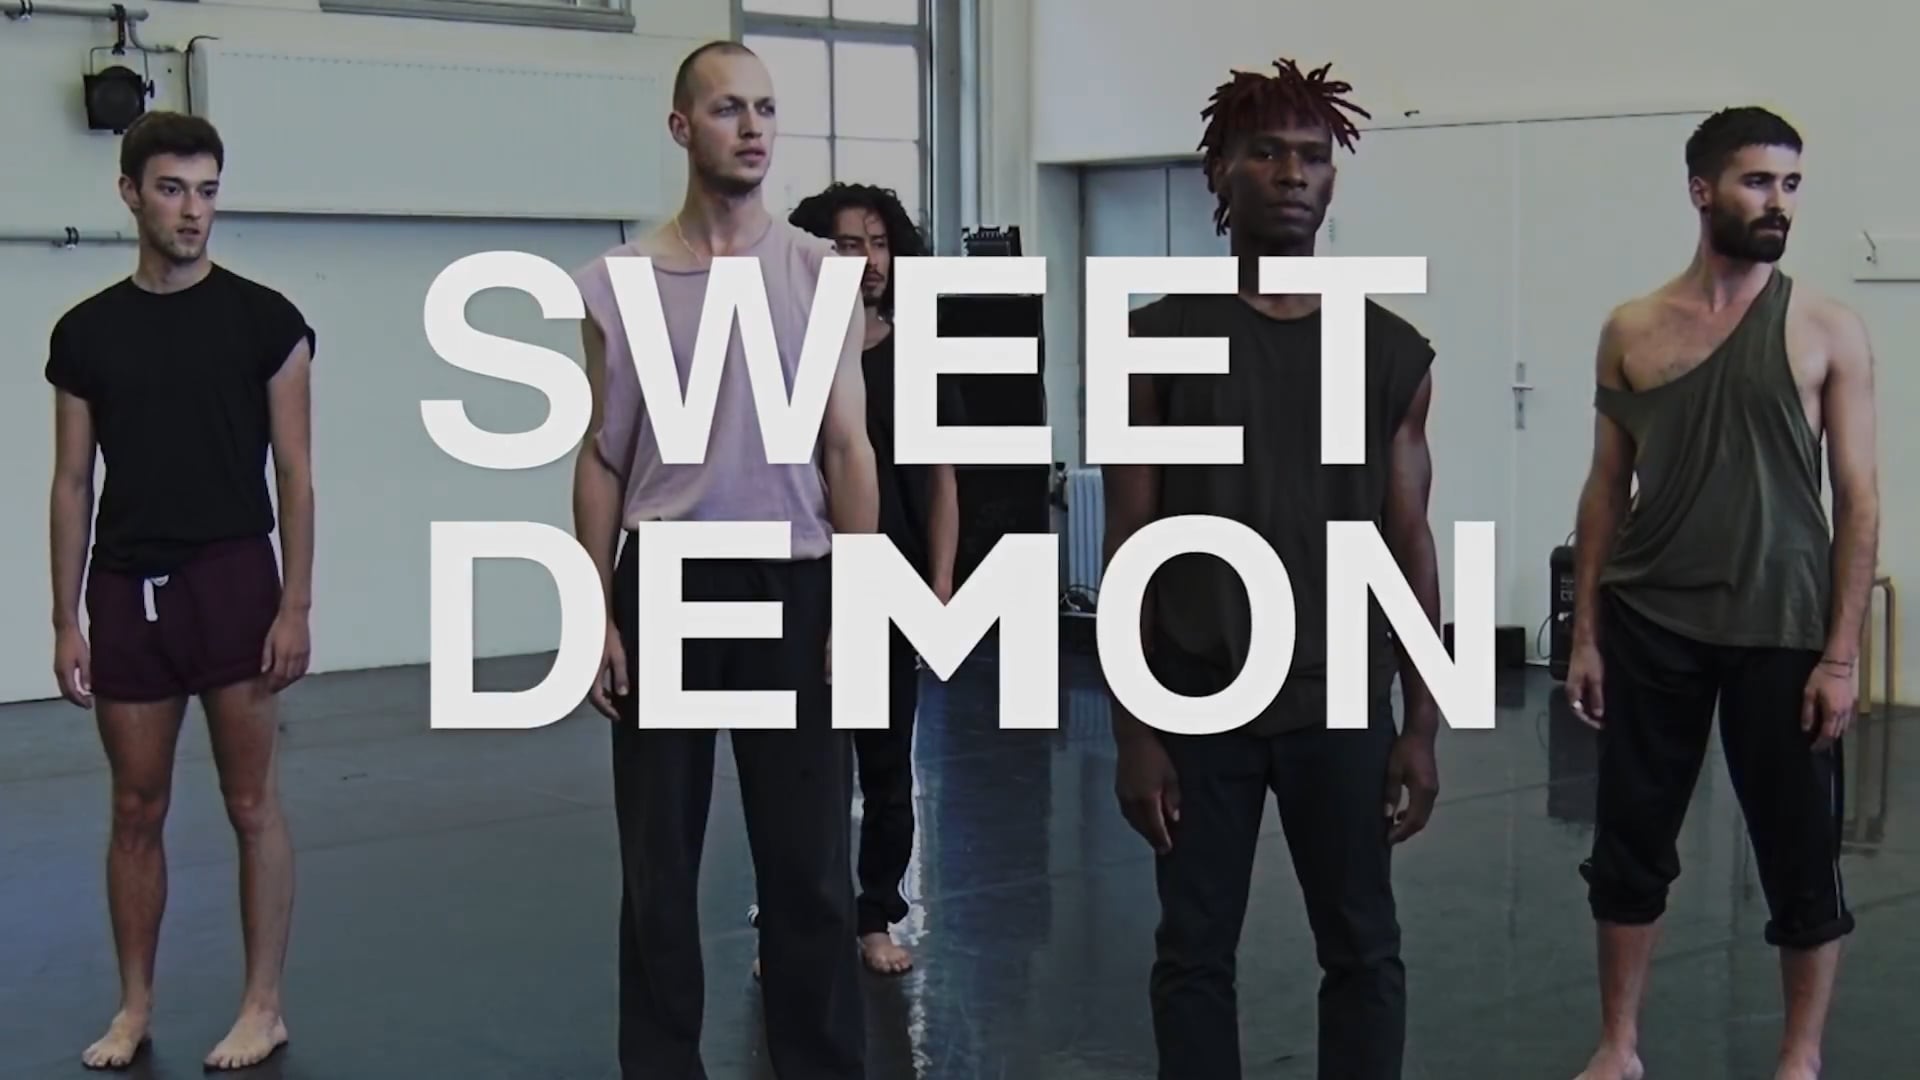 Sweet Demon by LeineRoebana Music&Dance Company. Video Ederson Xavier